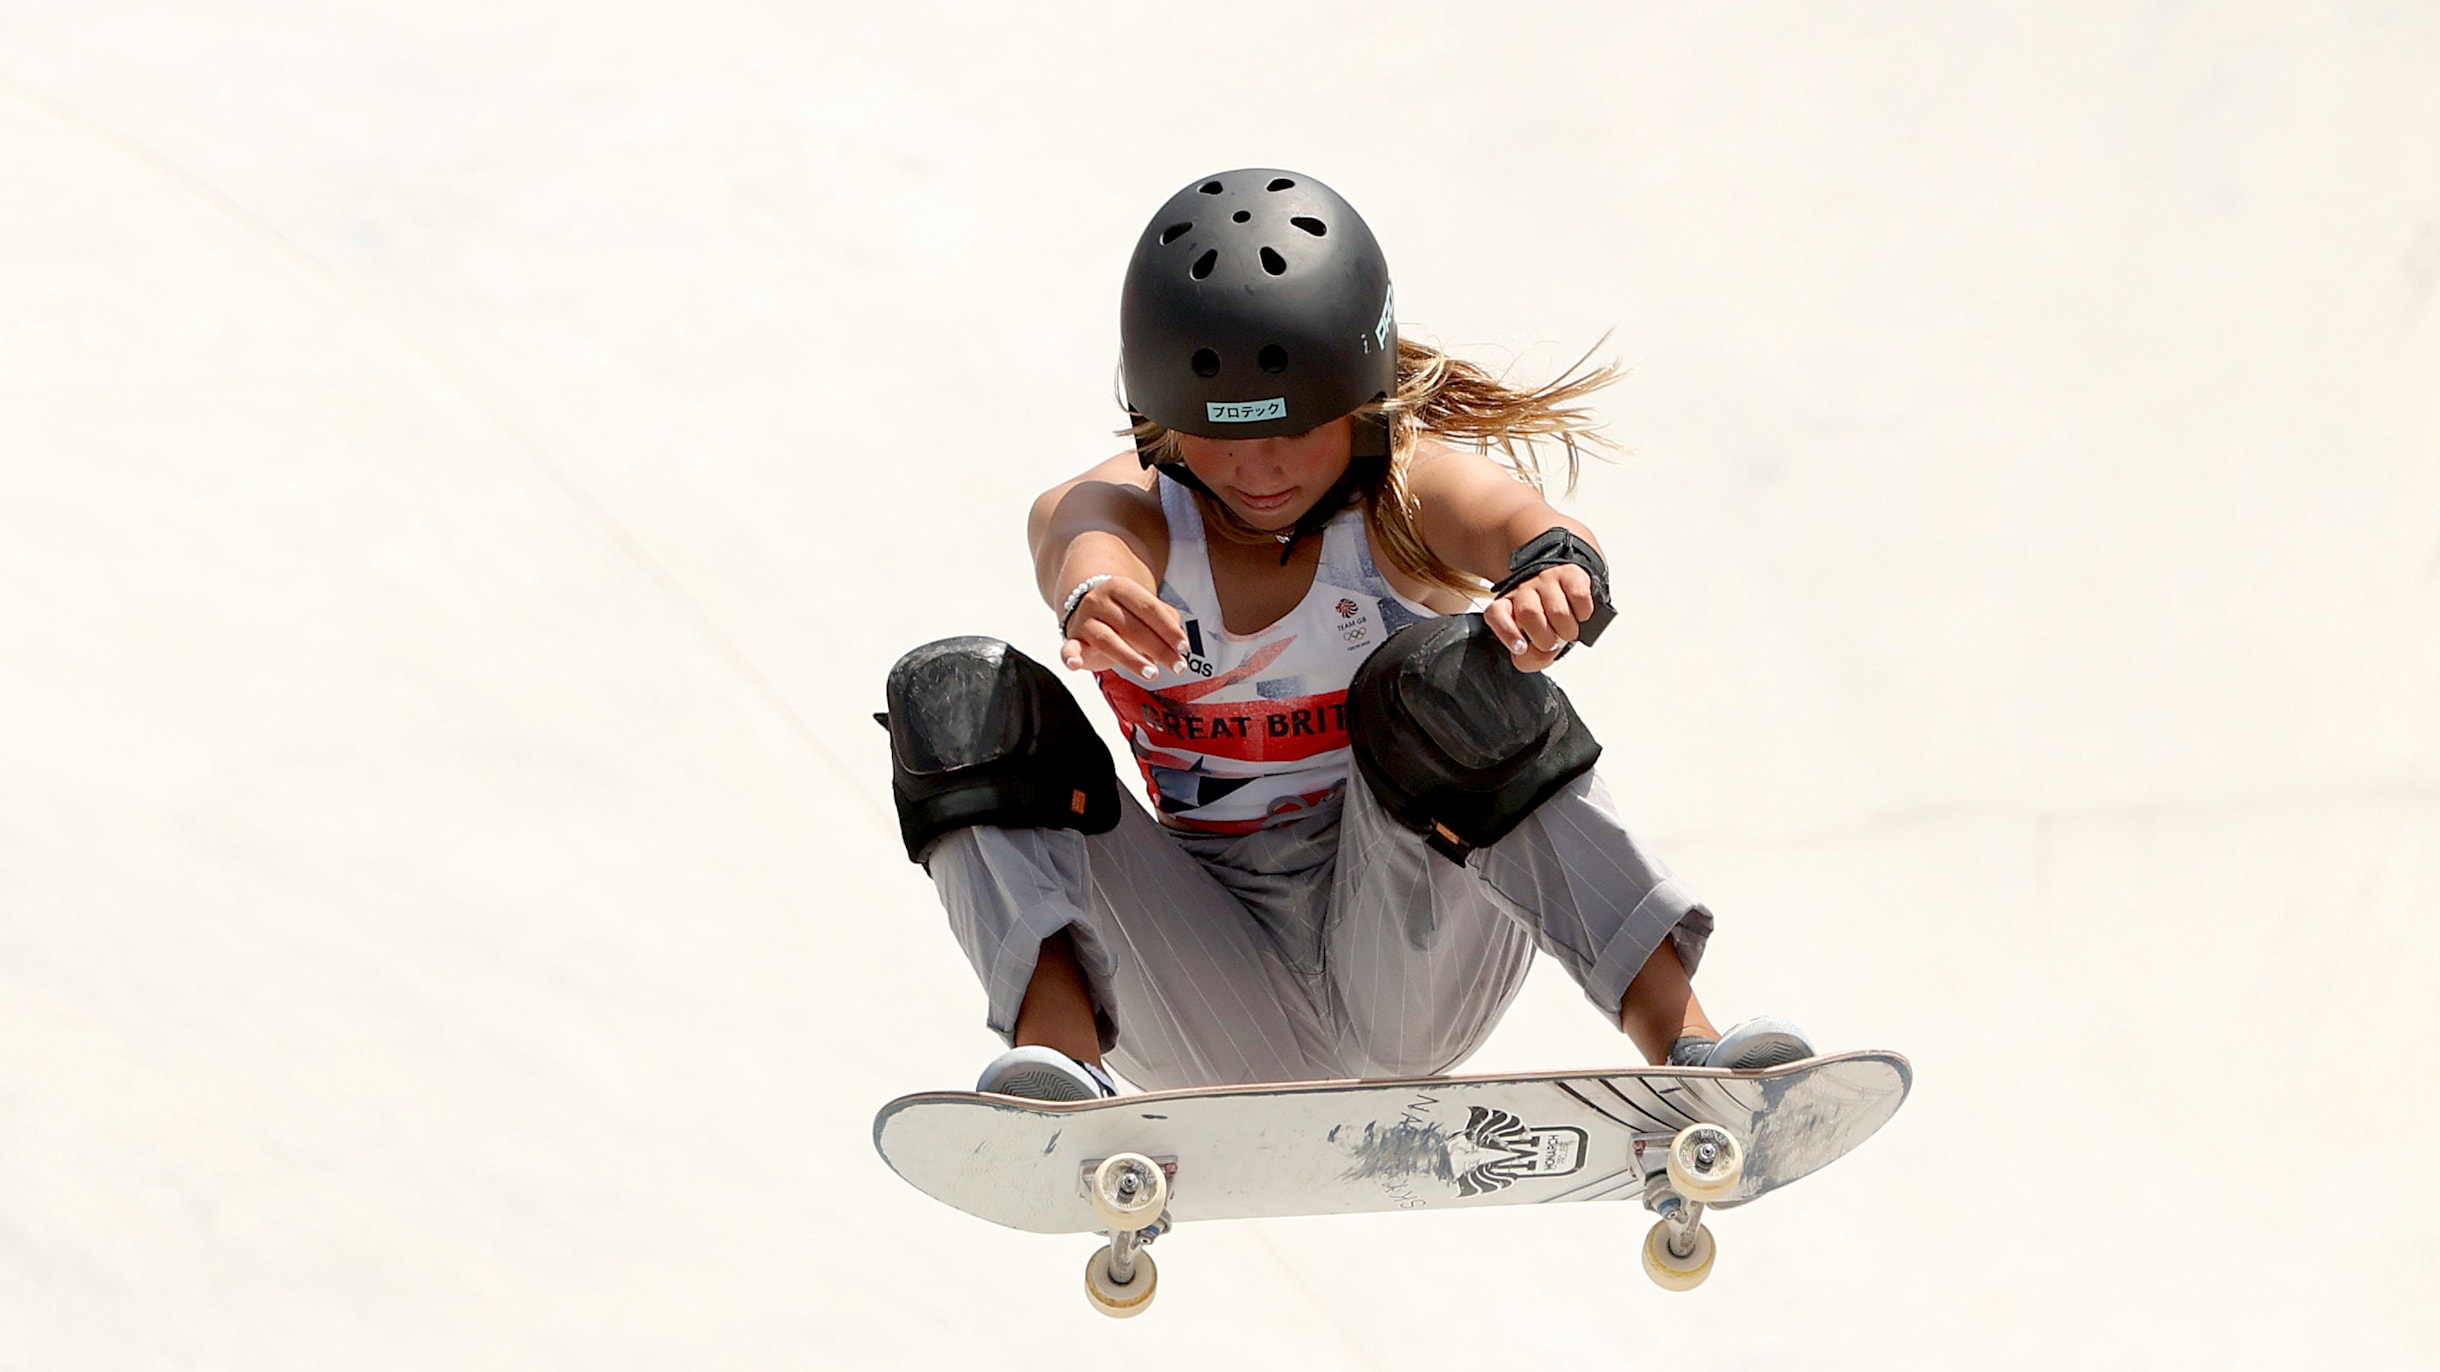 2023 World Skateboarding Tour Park Sky Brown and Luigi Cini win park competitions in San Juan